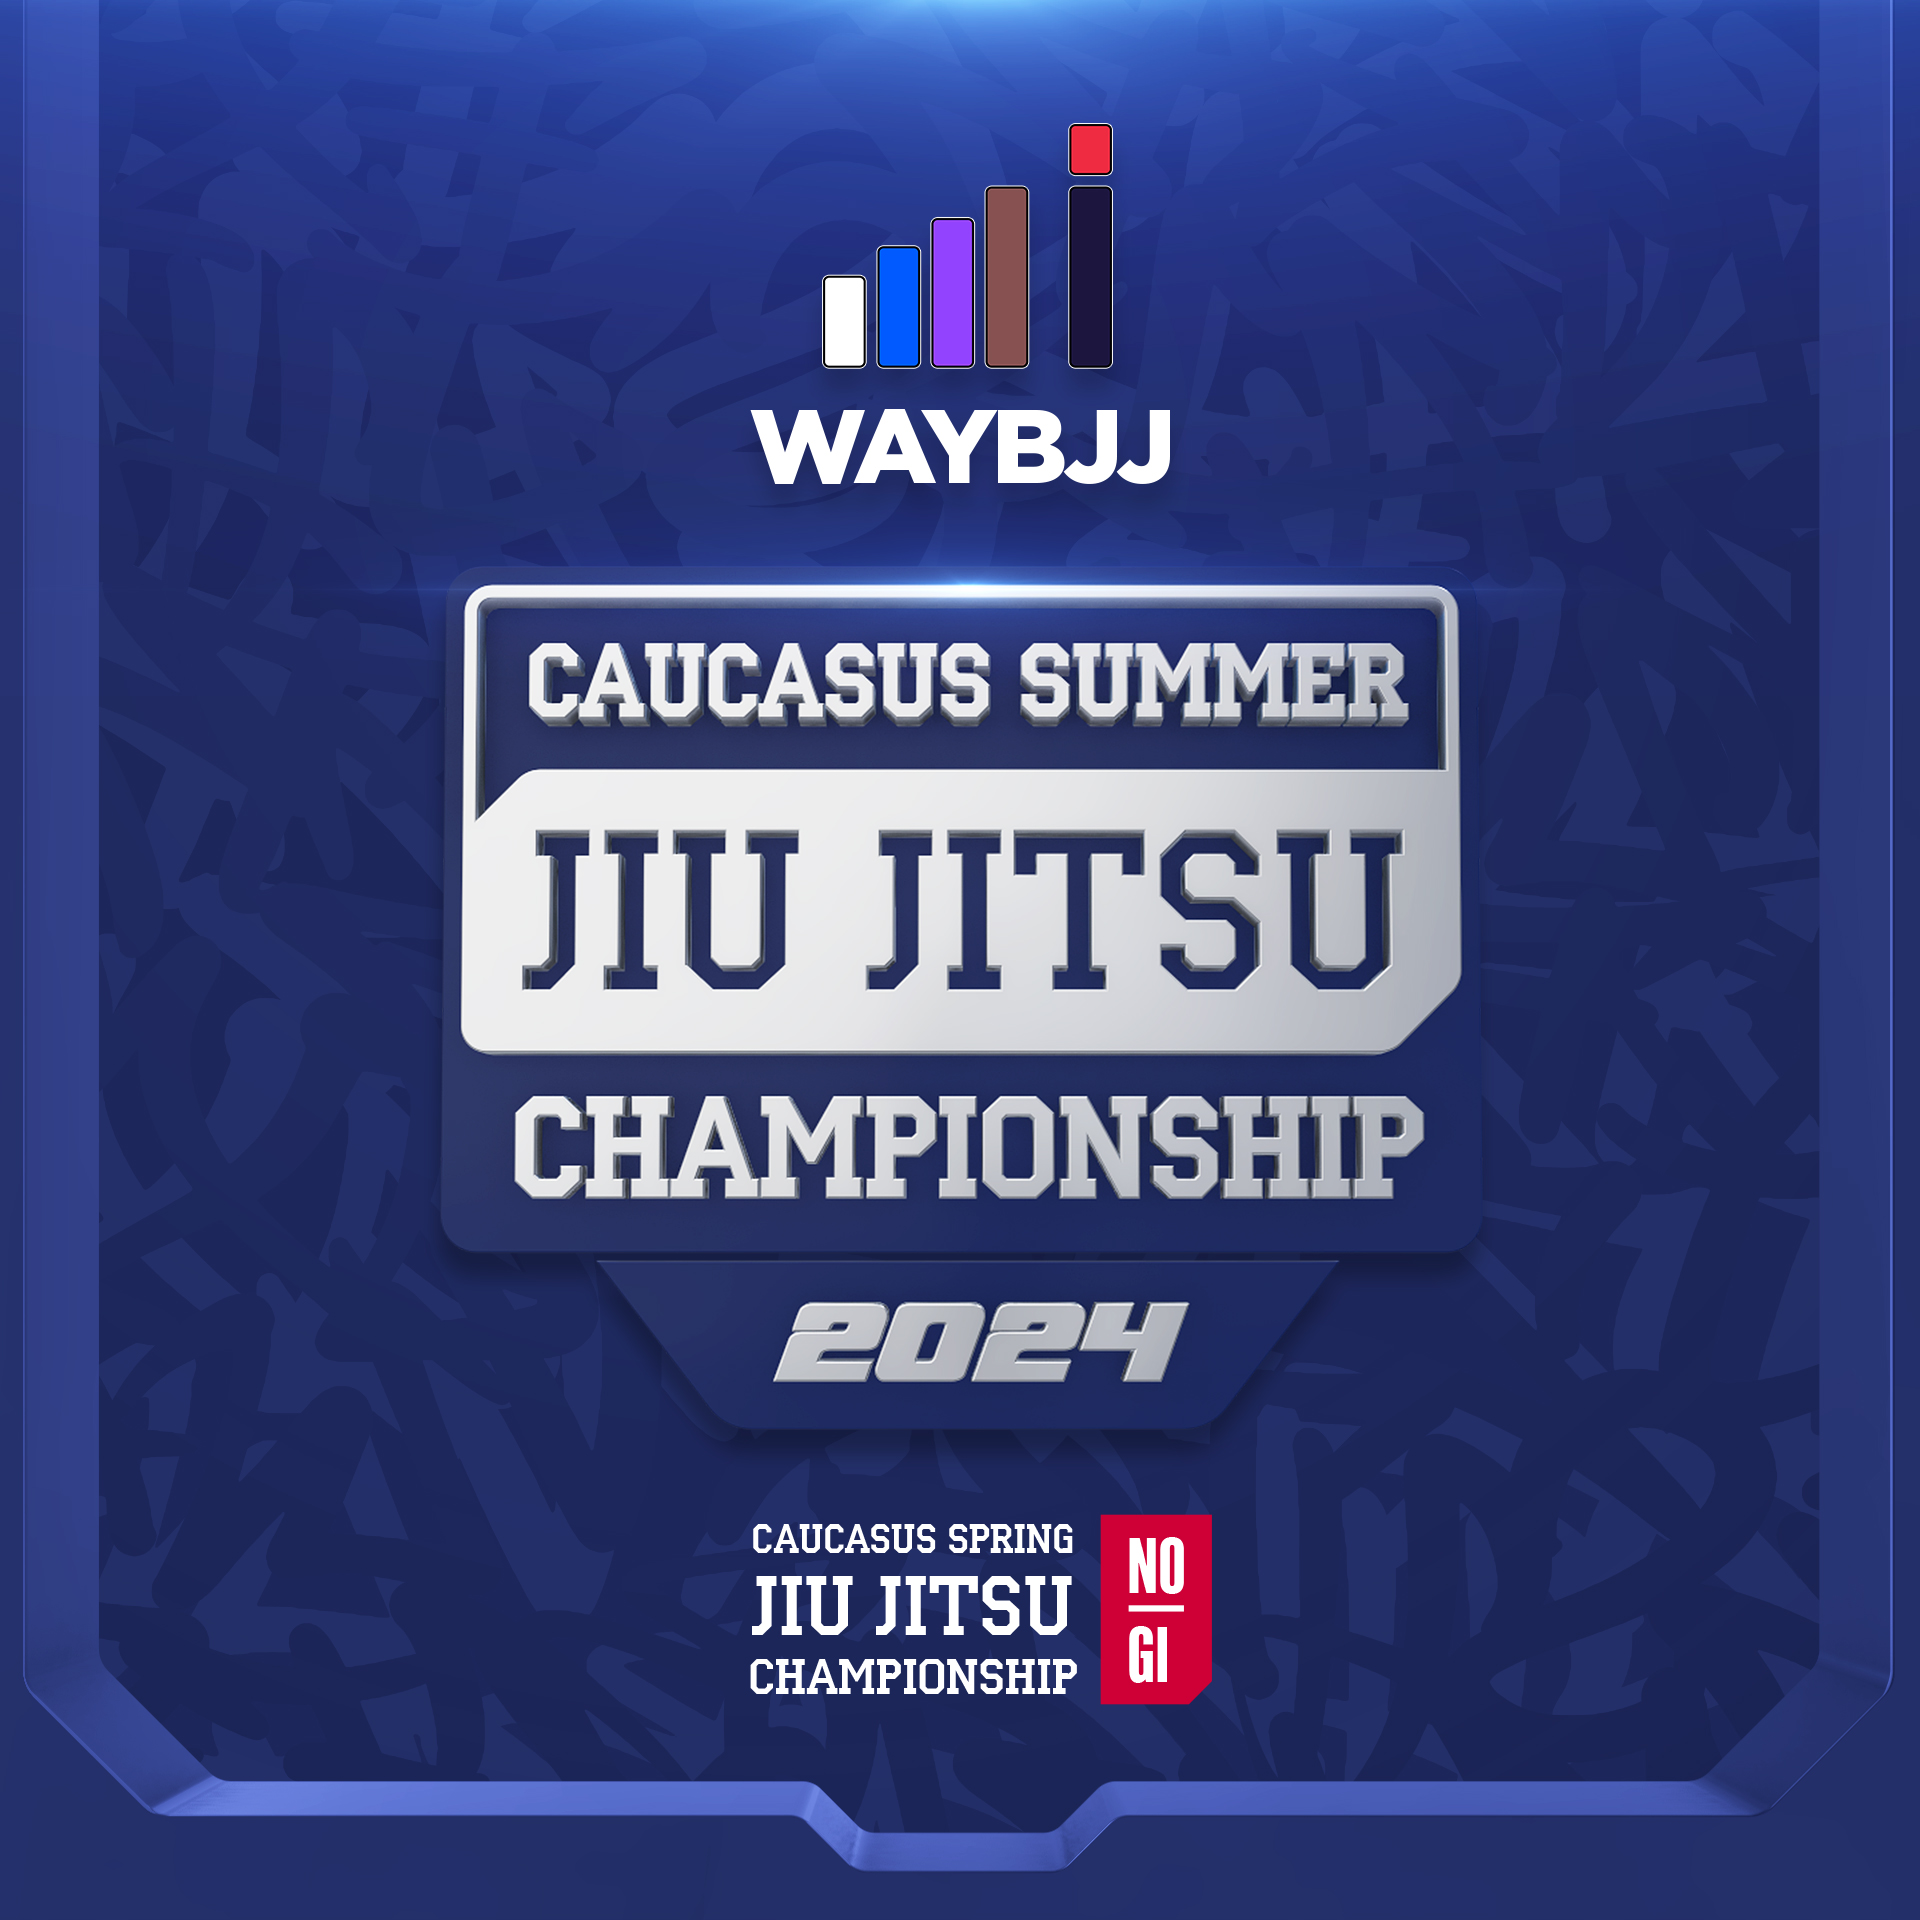 WAYBJJ CAUCASUS SUMMER JIU-JITSU CHAMPIONSHIP DAY-1